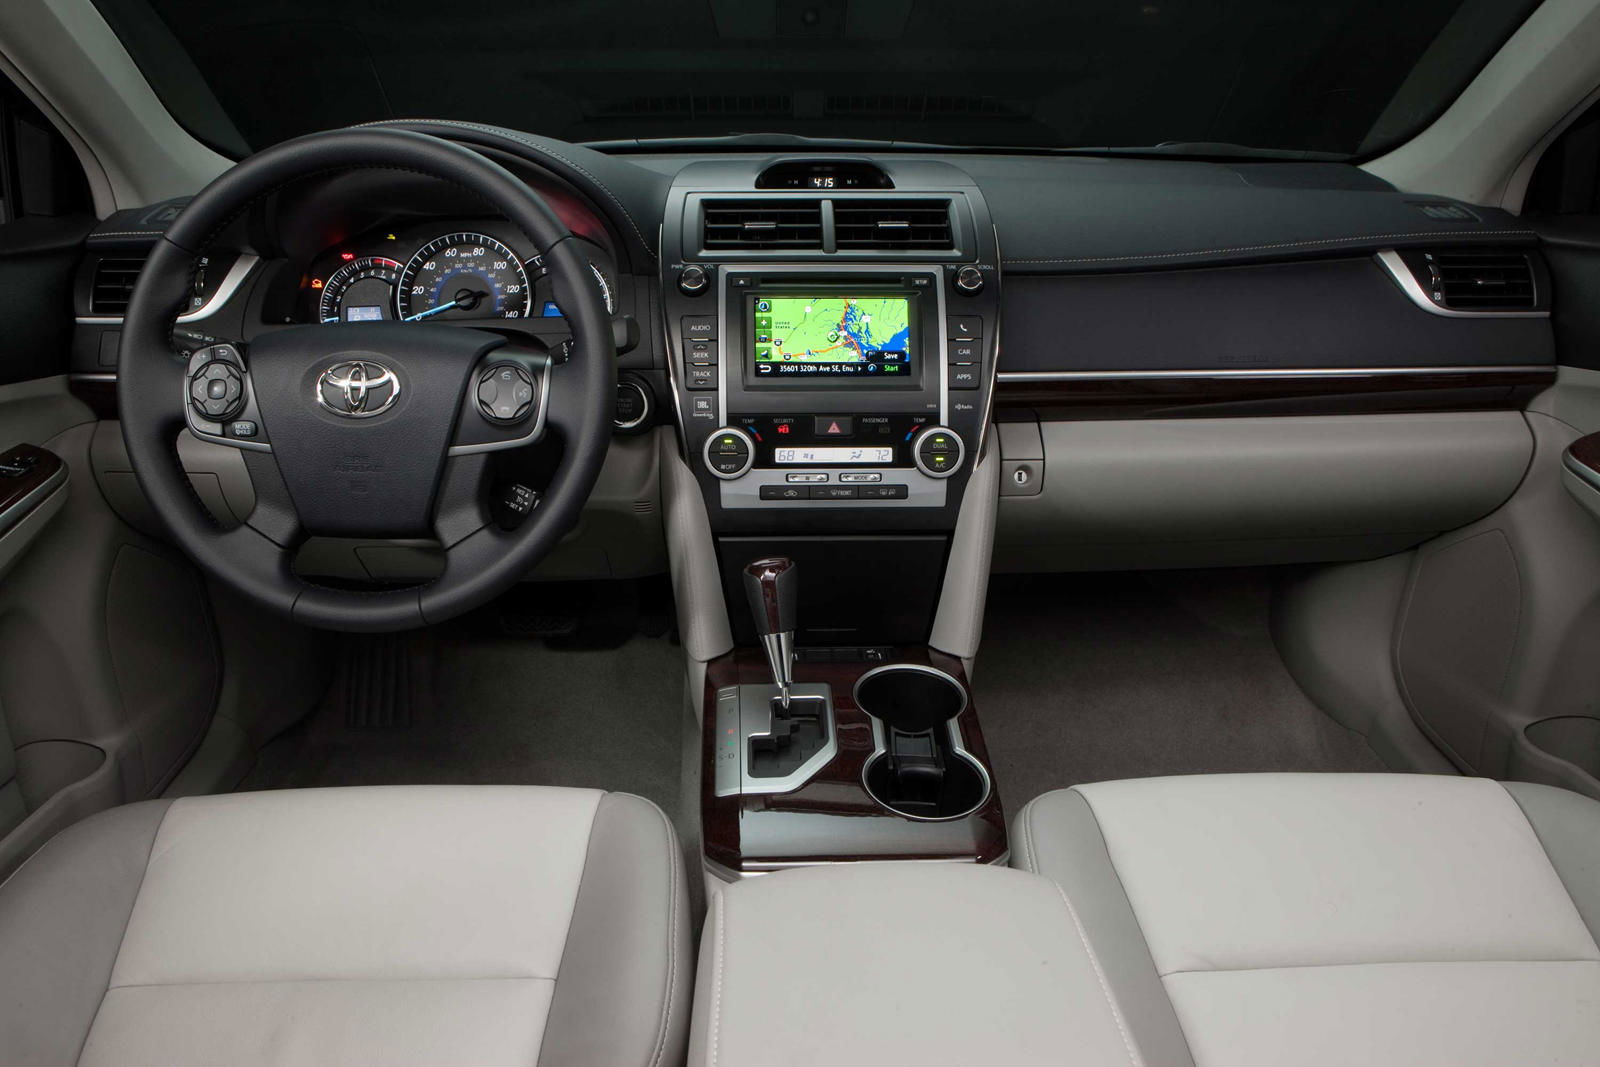 2012 Toyota Carmy infortainment.